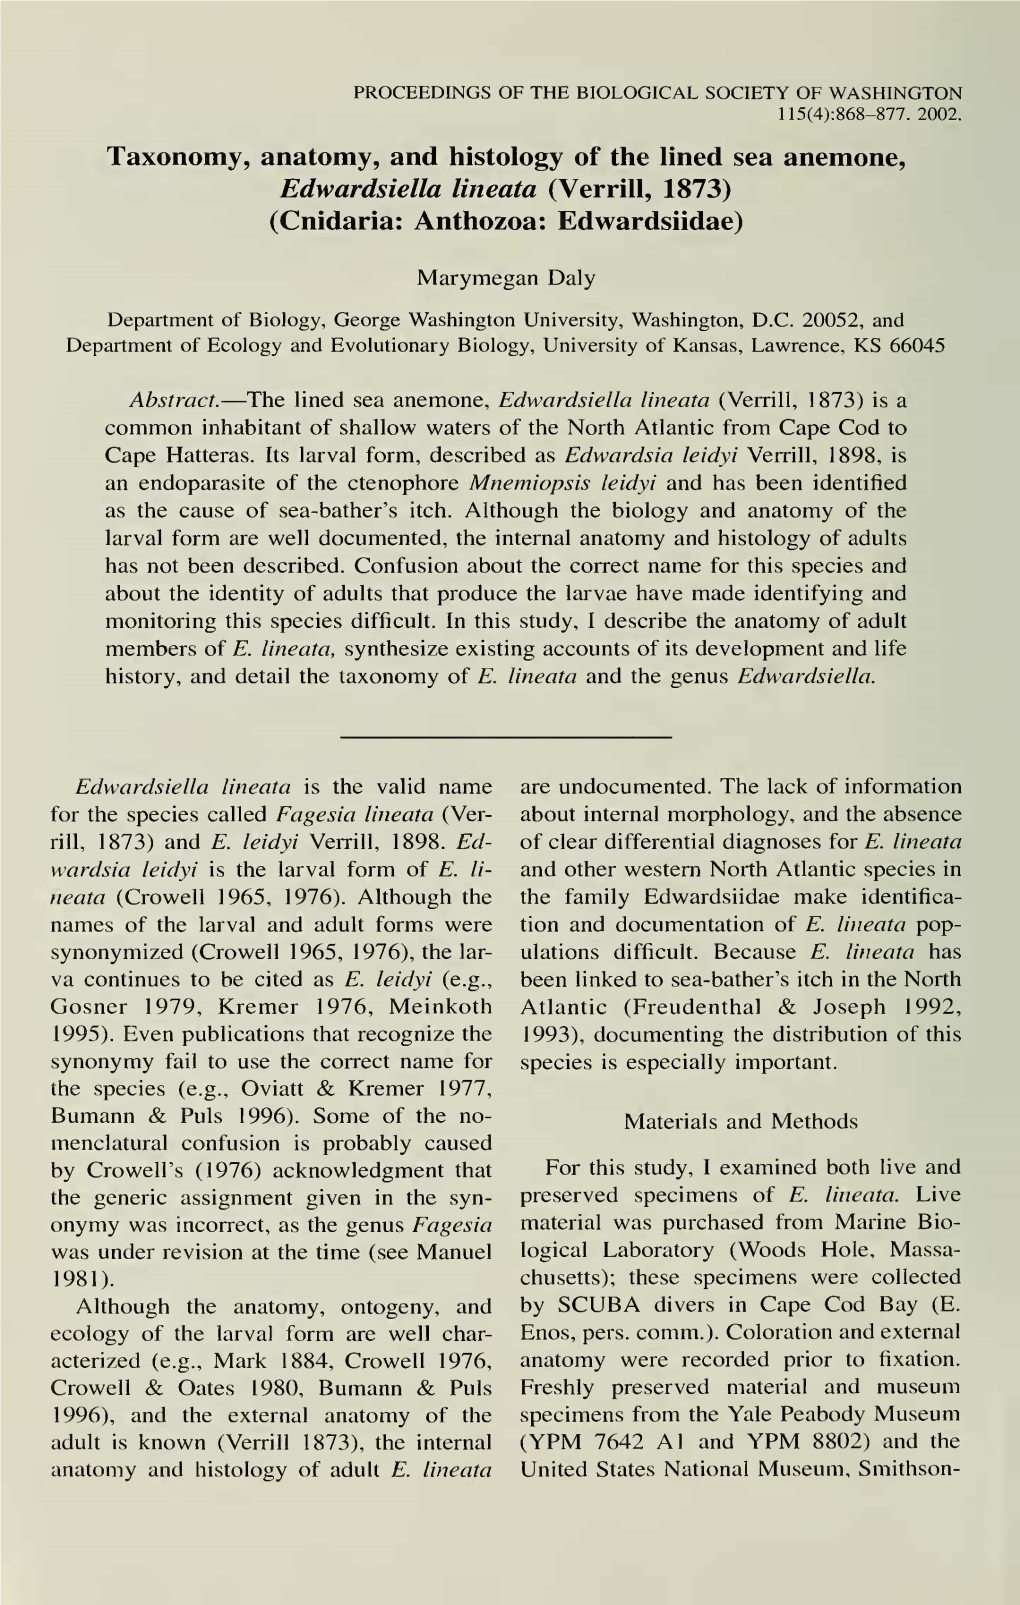 Proceedings of the Biological Society of Washington 115(4):868-877